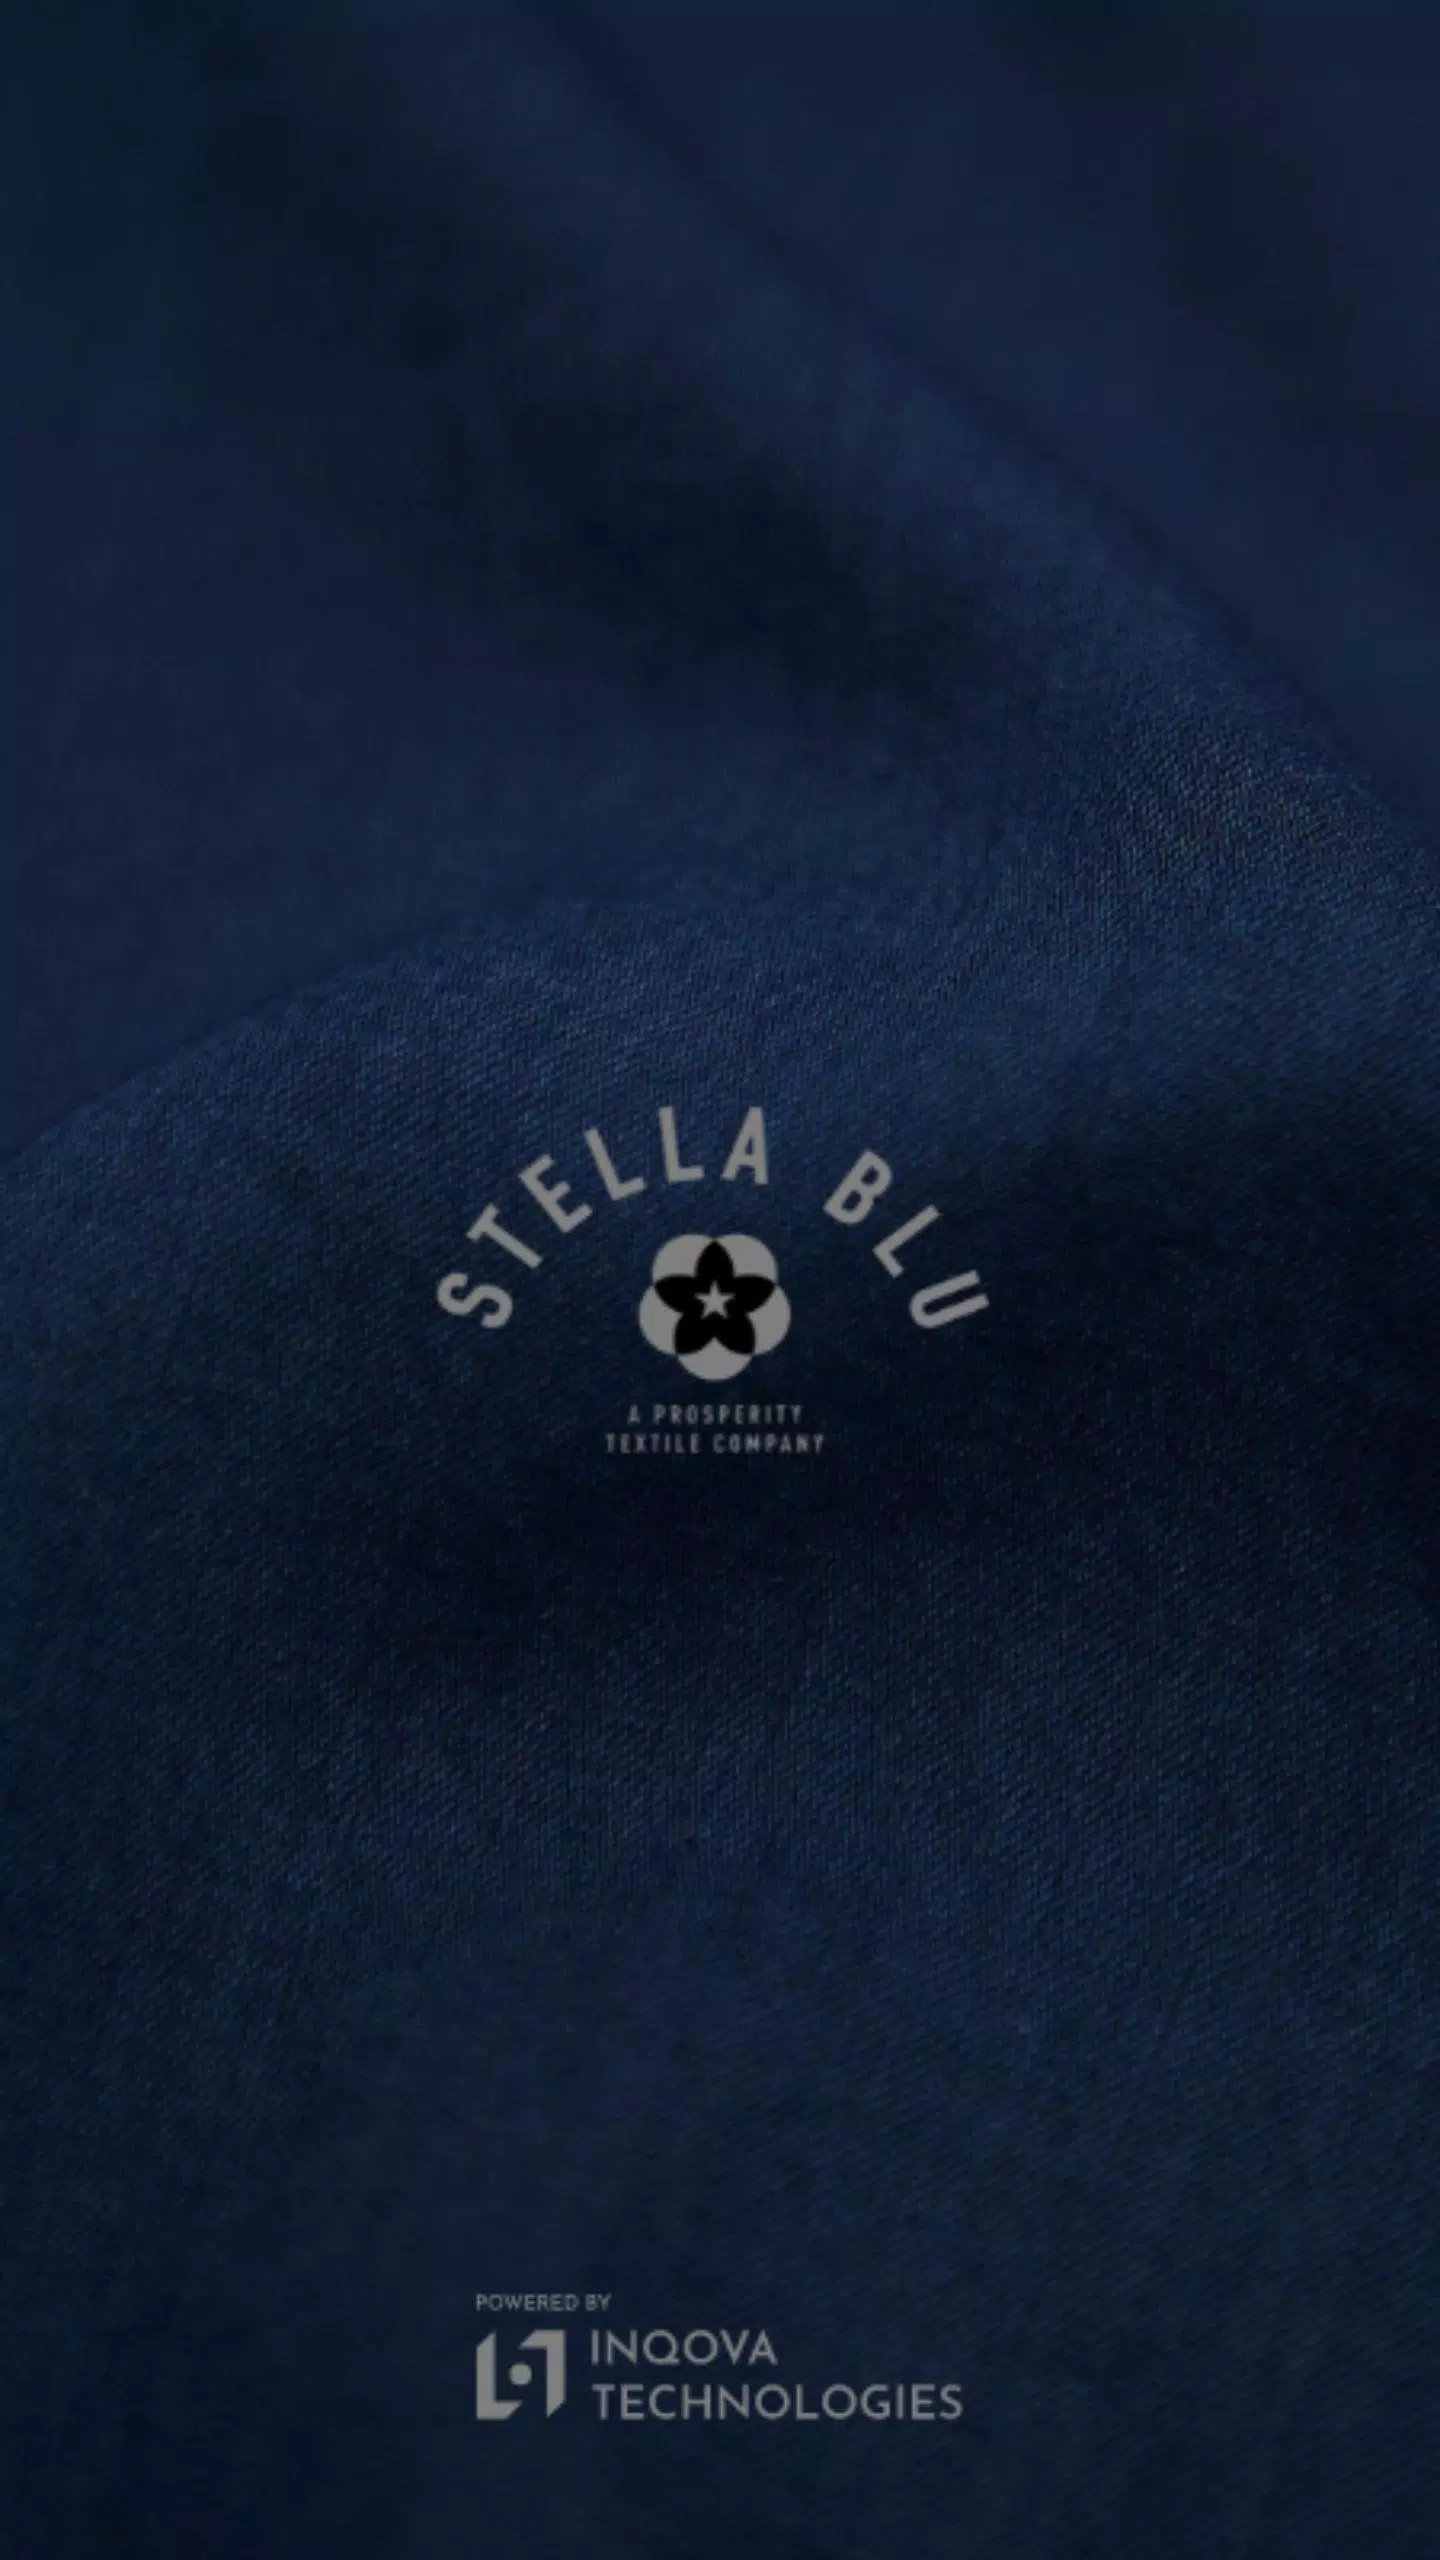 Stella Blu Textile